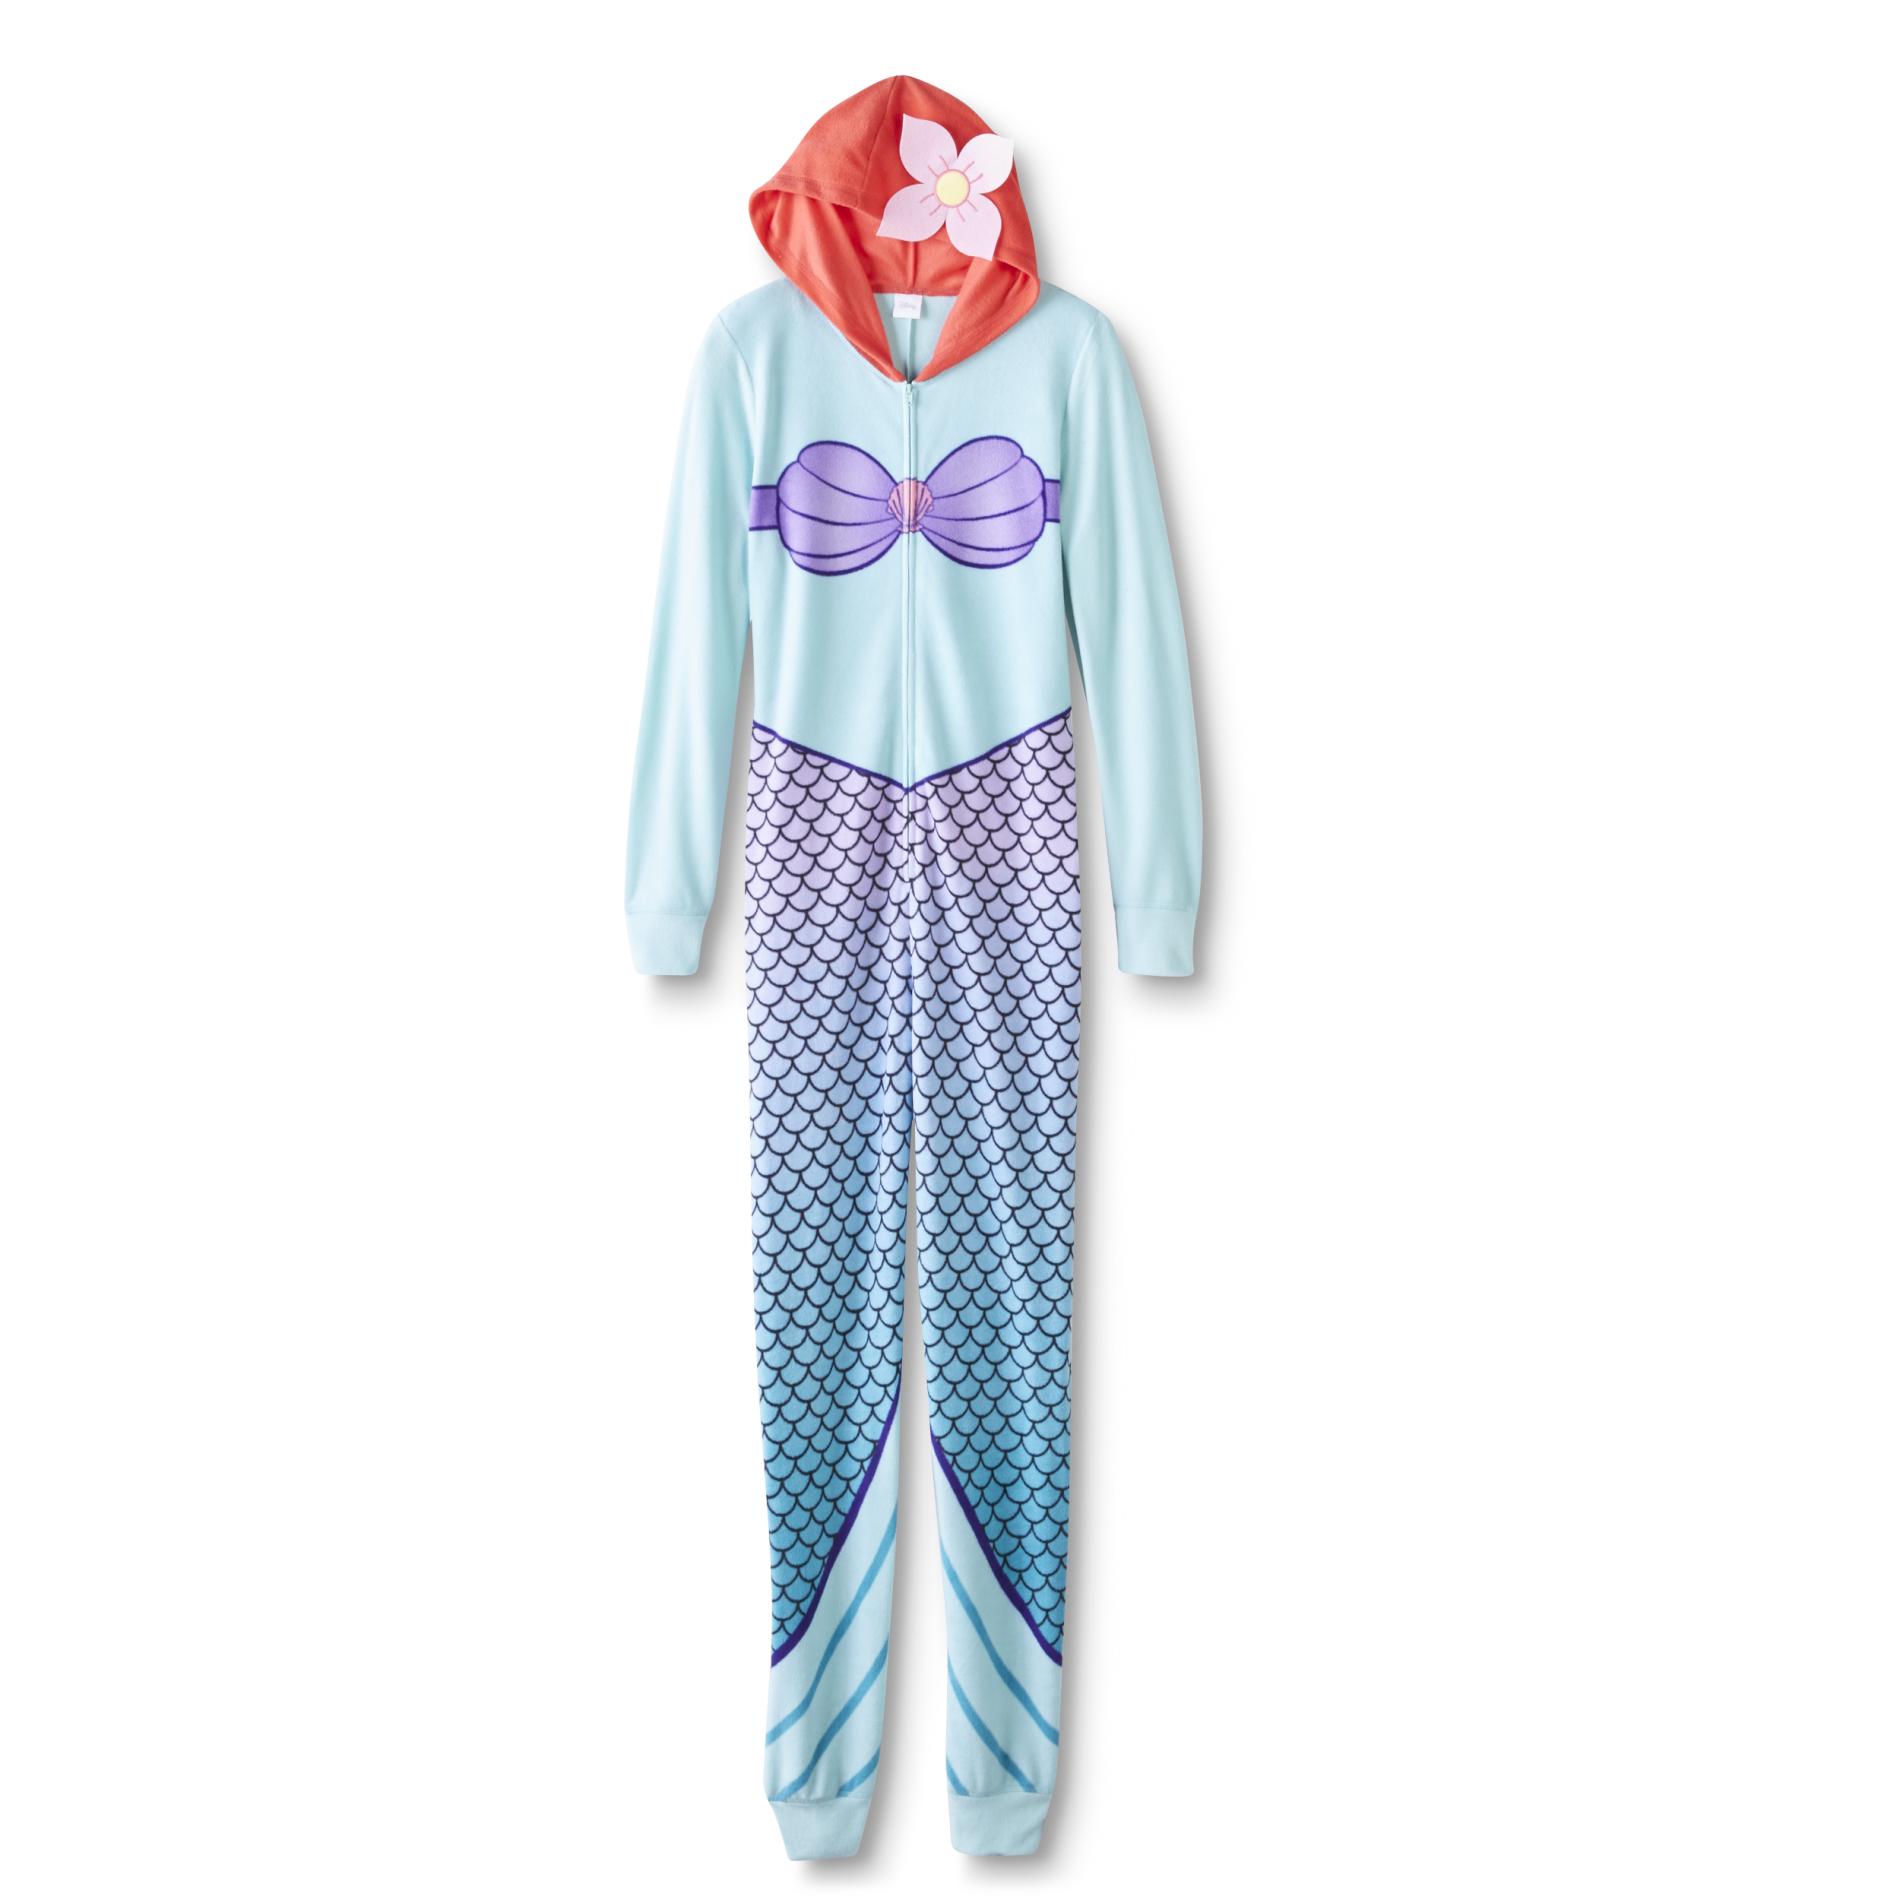 Disney The Little Mermaid Women's One-Piece Pajamas - Ariel